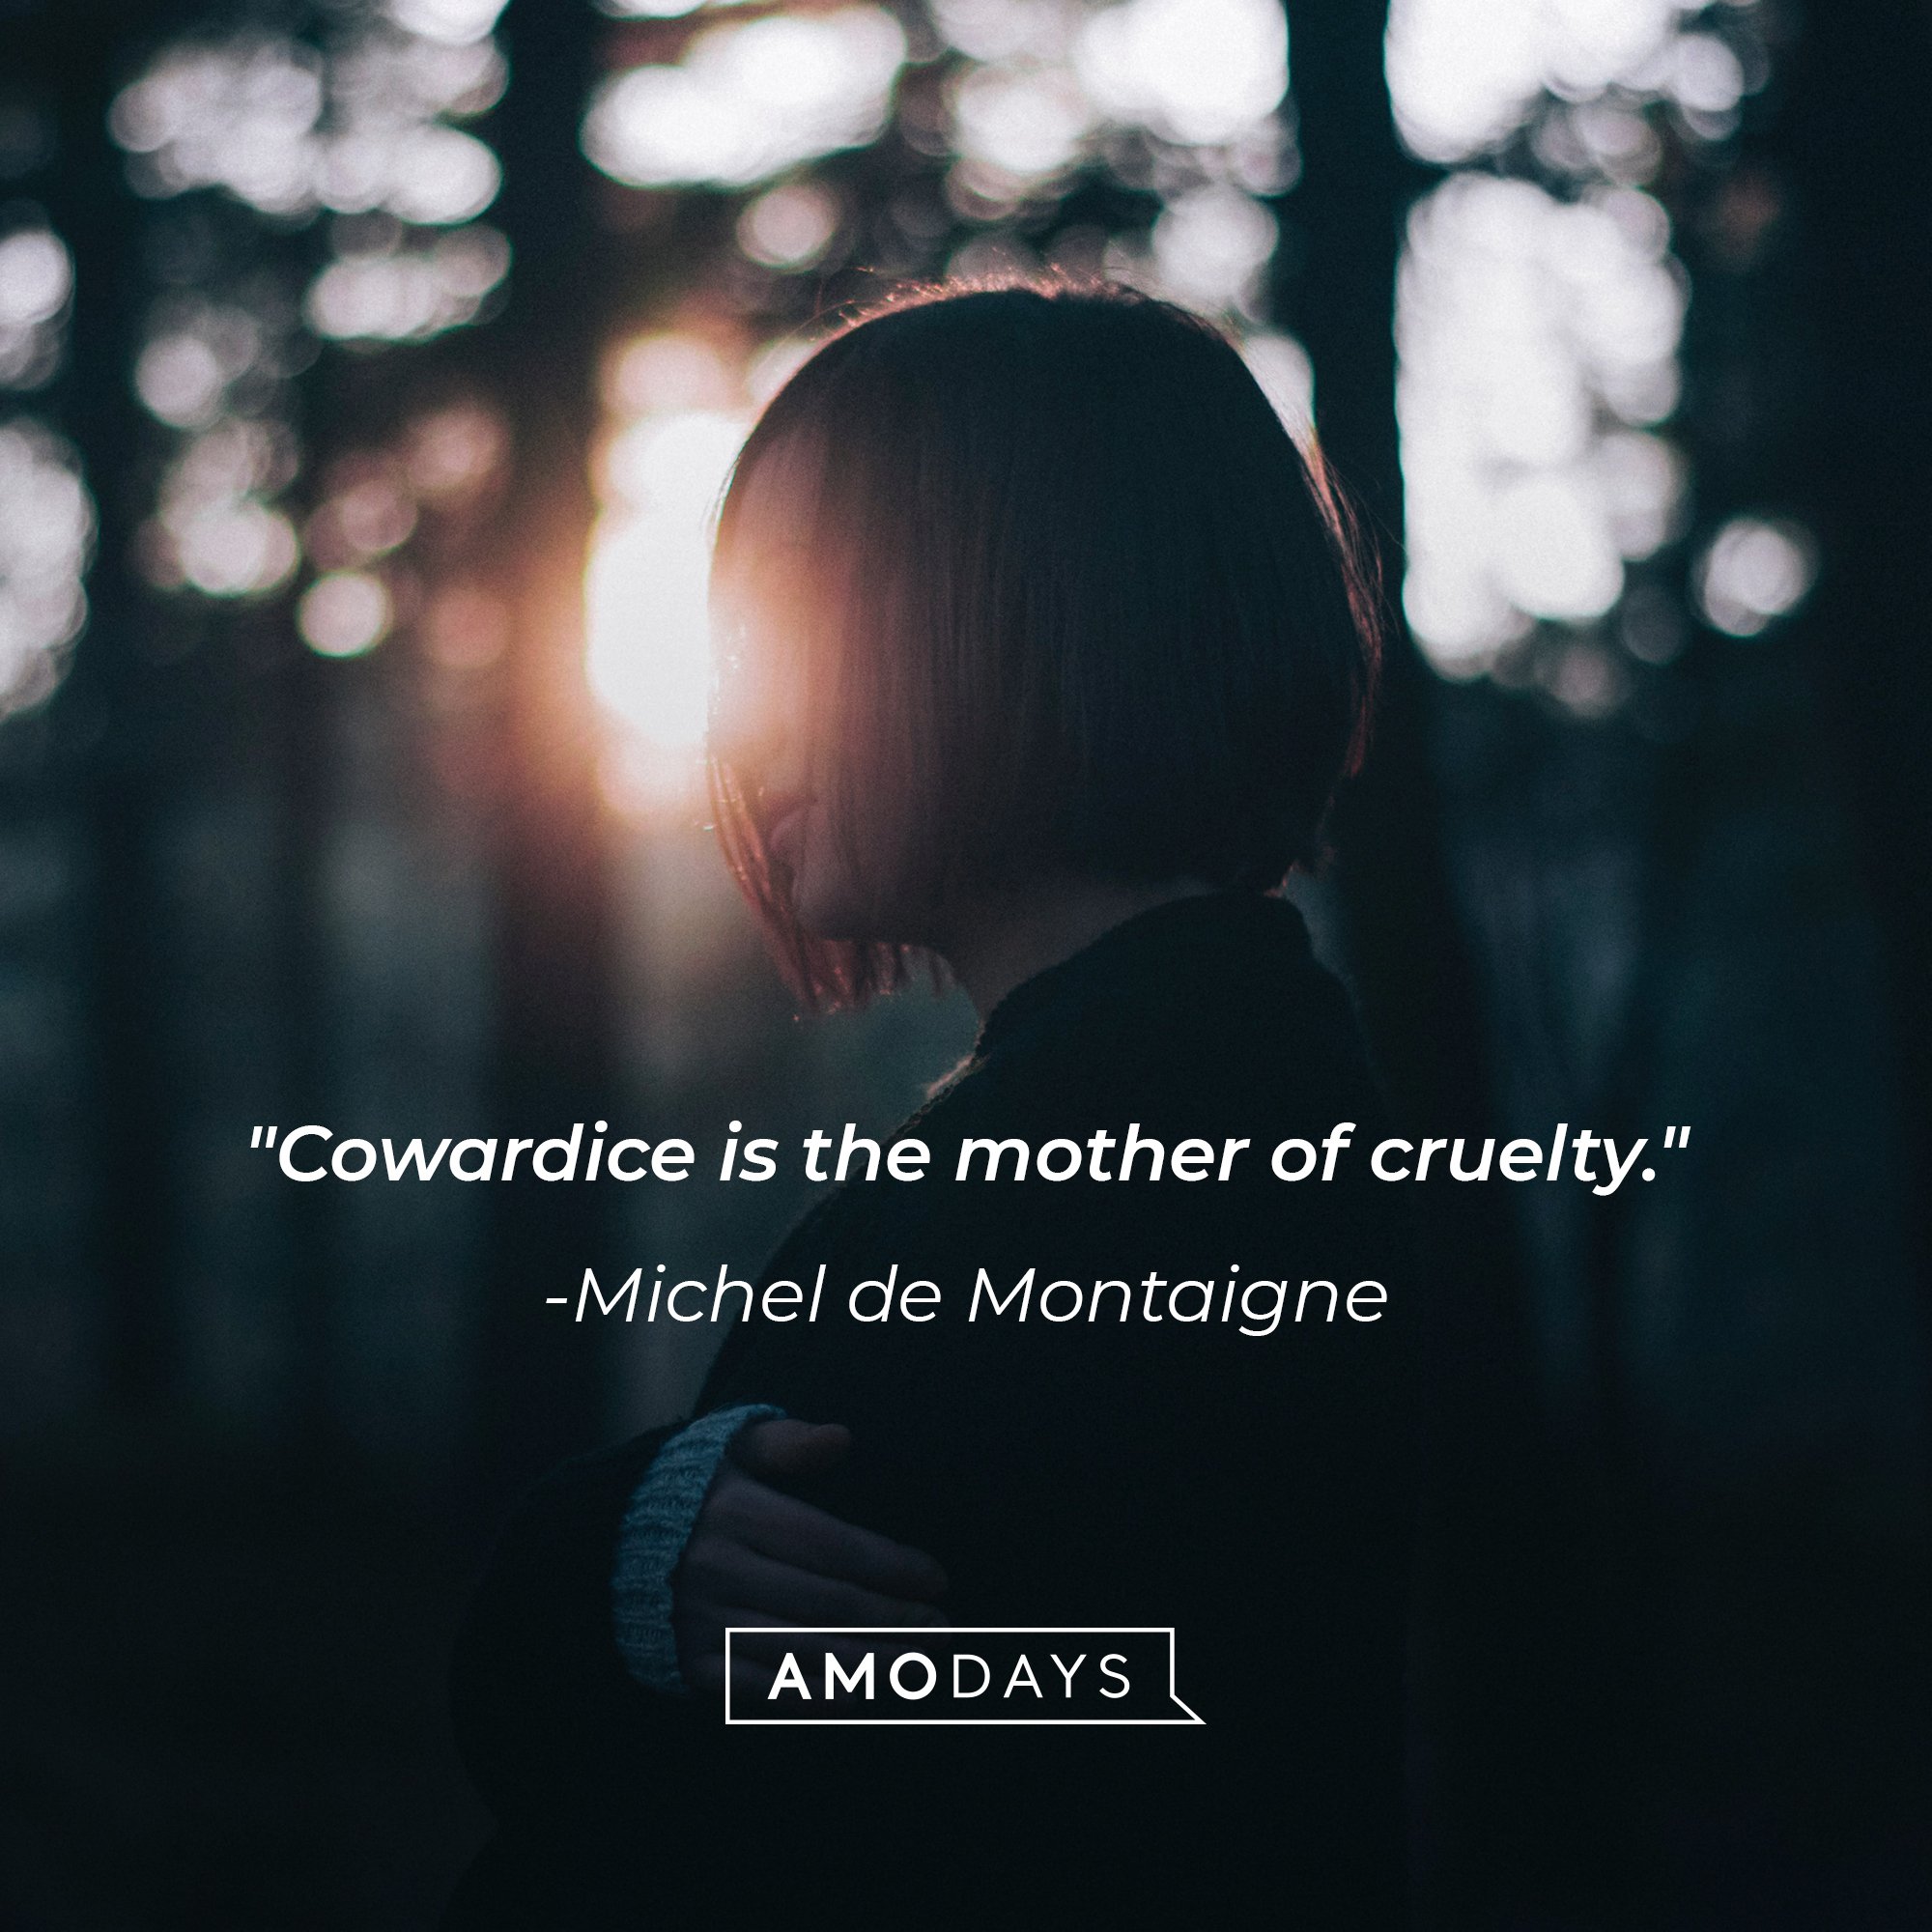 Michel de Montaigne’s quote: "Cowardice is the mother of cruelty." | Image: AmoDays